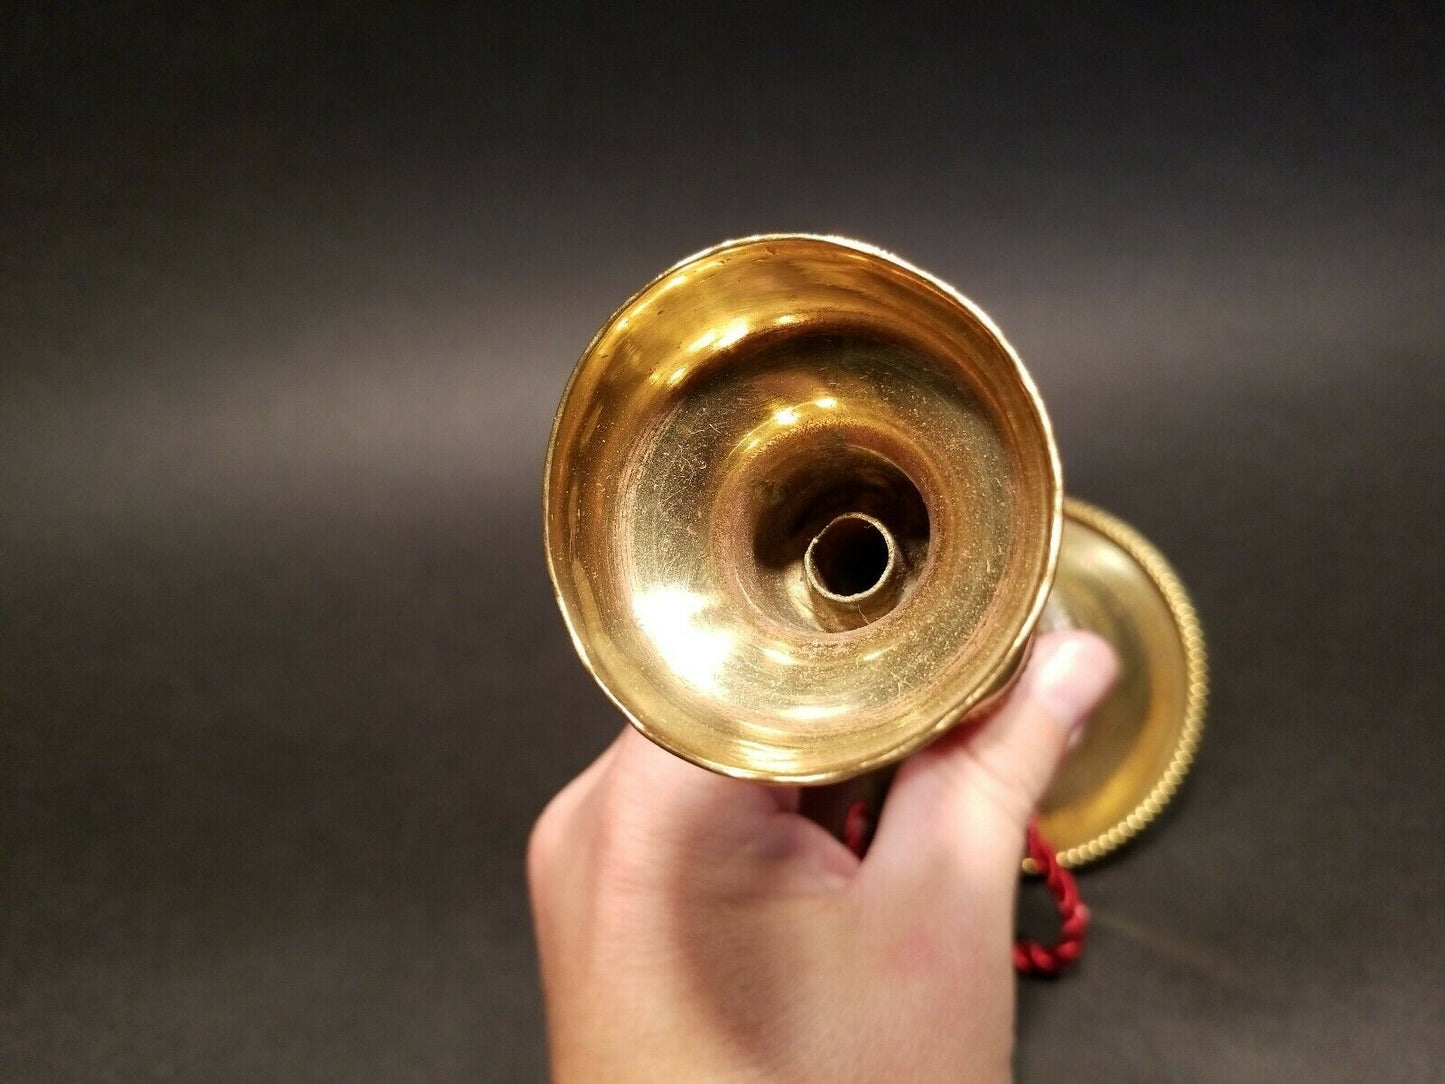 9" Antique Vintage Style Brass Fireman Presentation Horn Speaking Trumpet - Early Home Decor